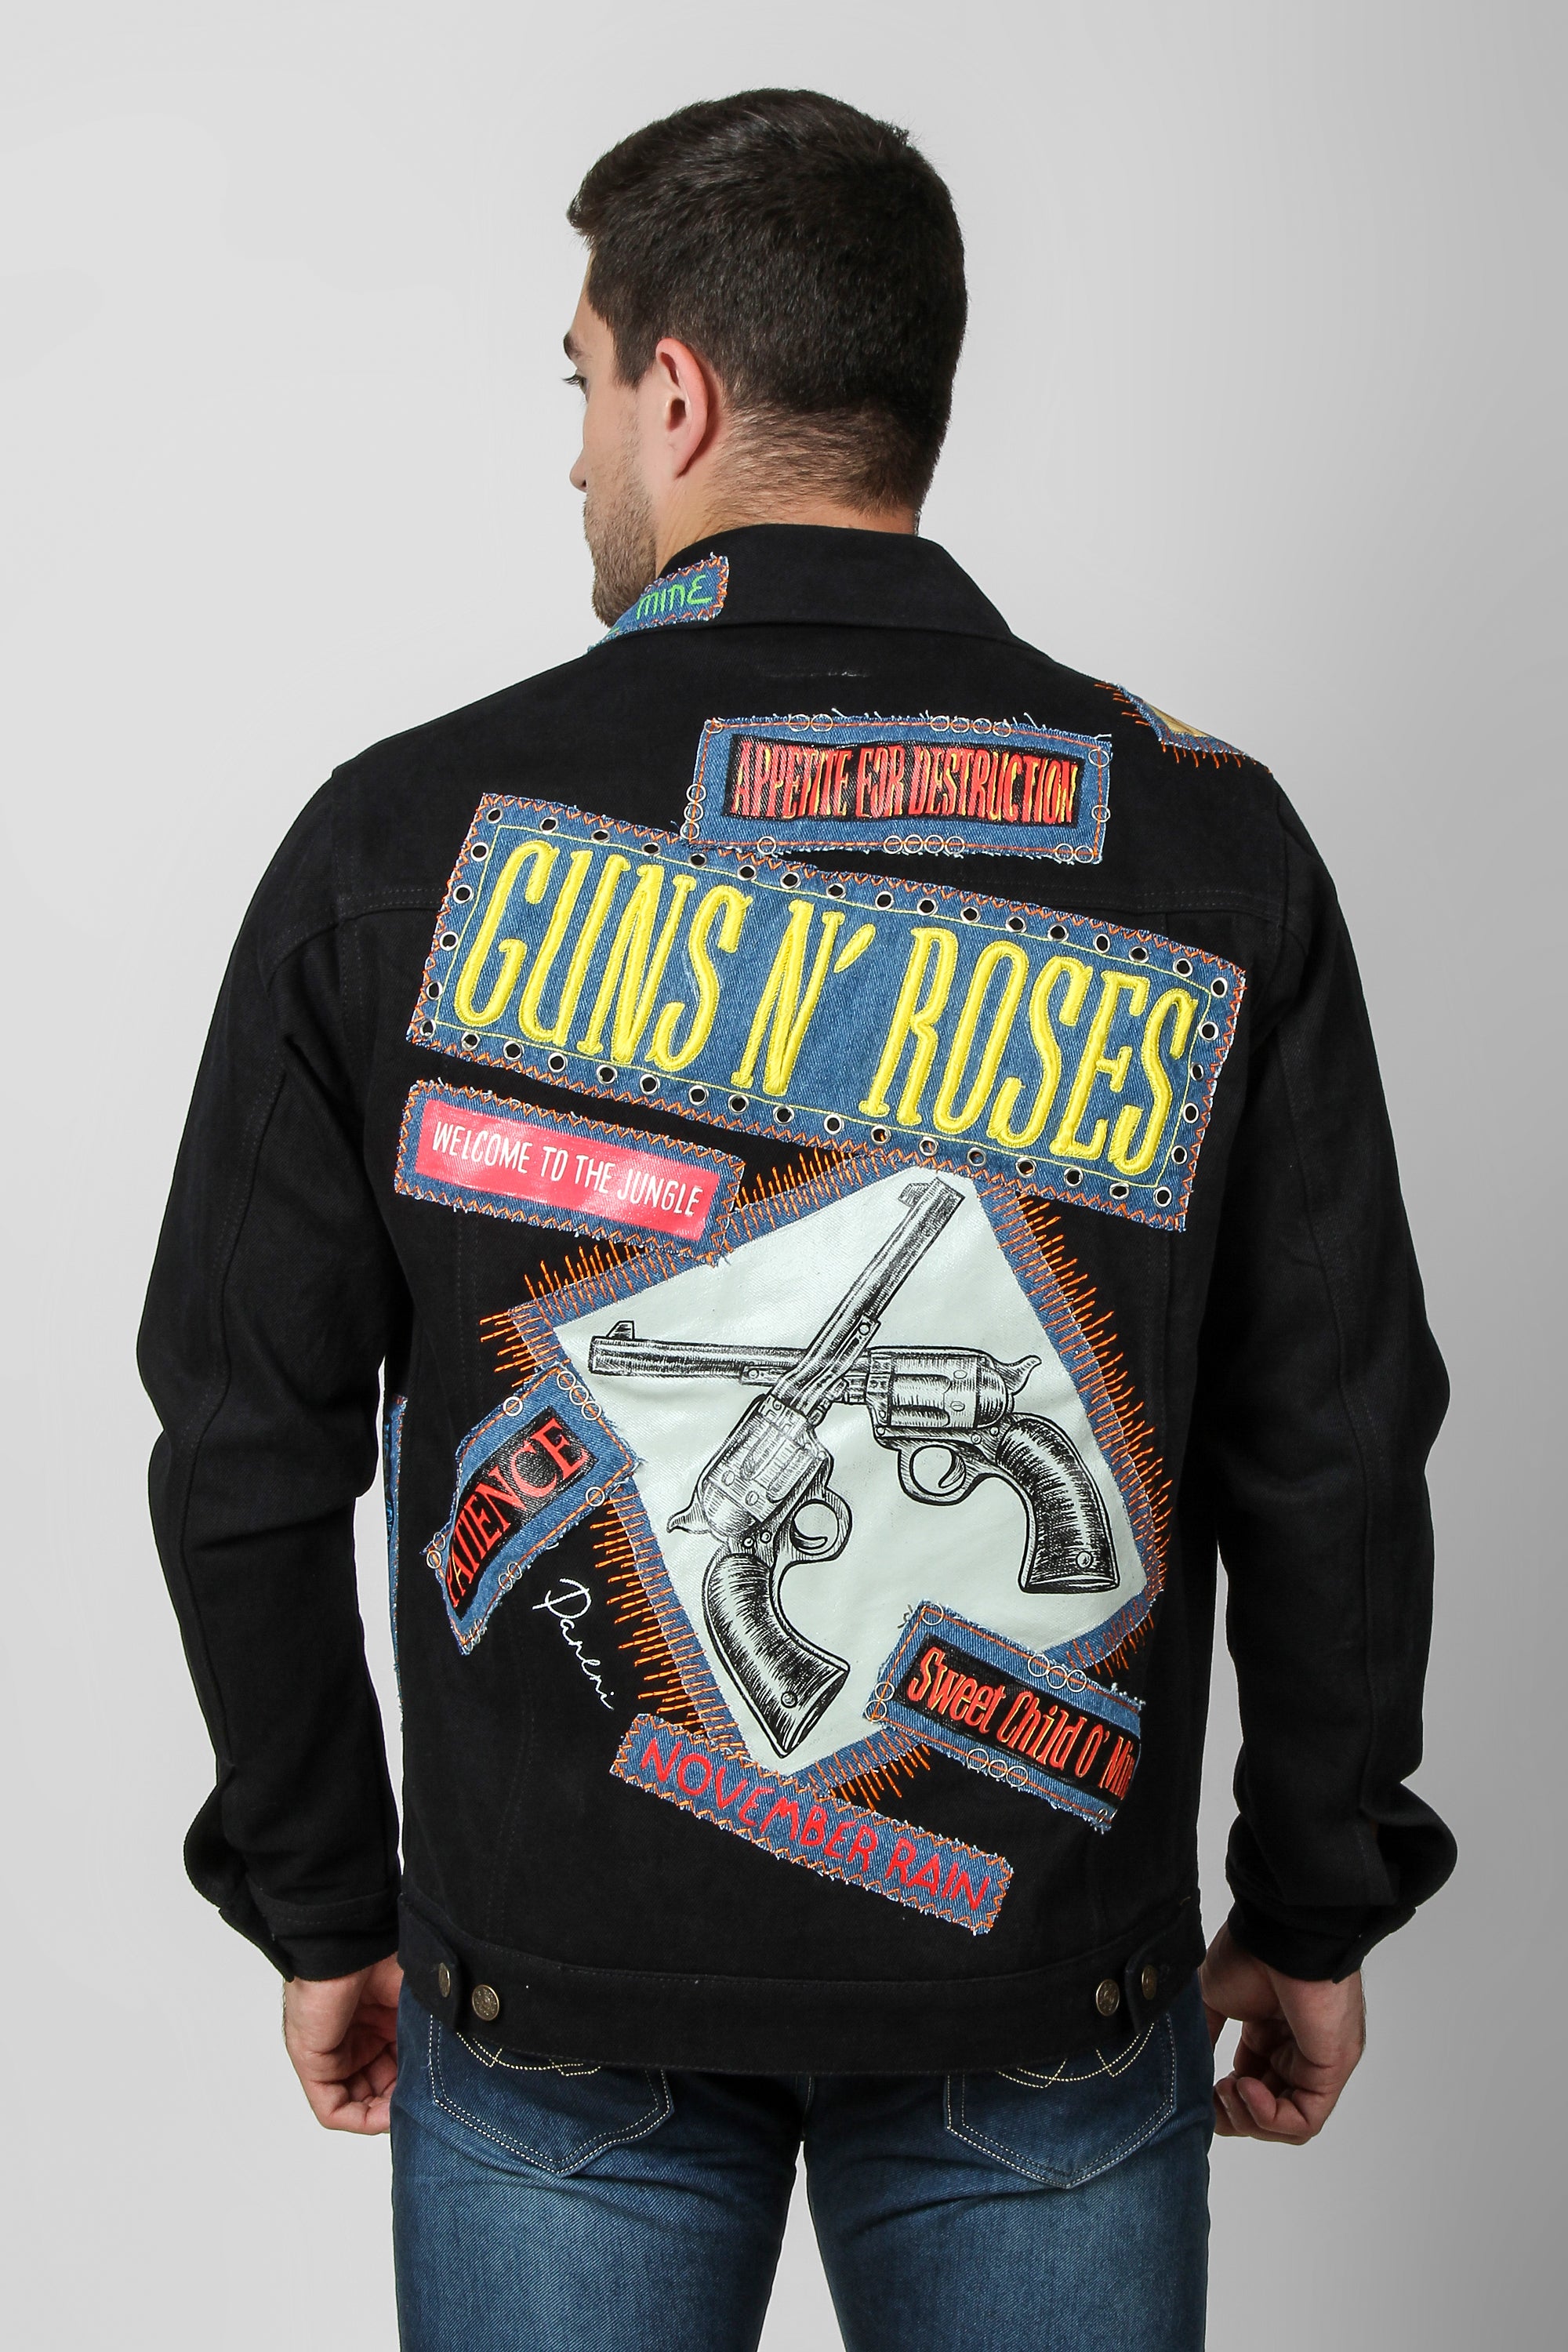 Guns n Roses Denim Jacket Hand-Painted Denim Jacket || Embroidered